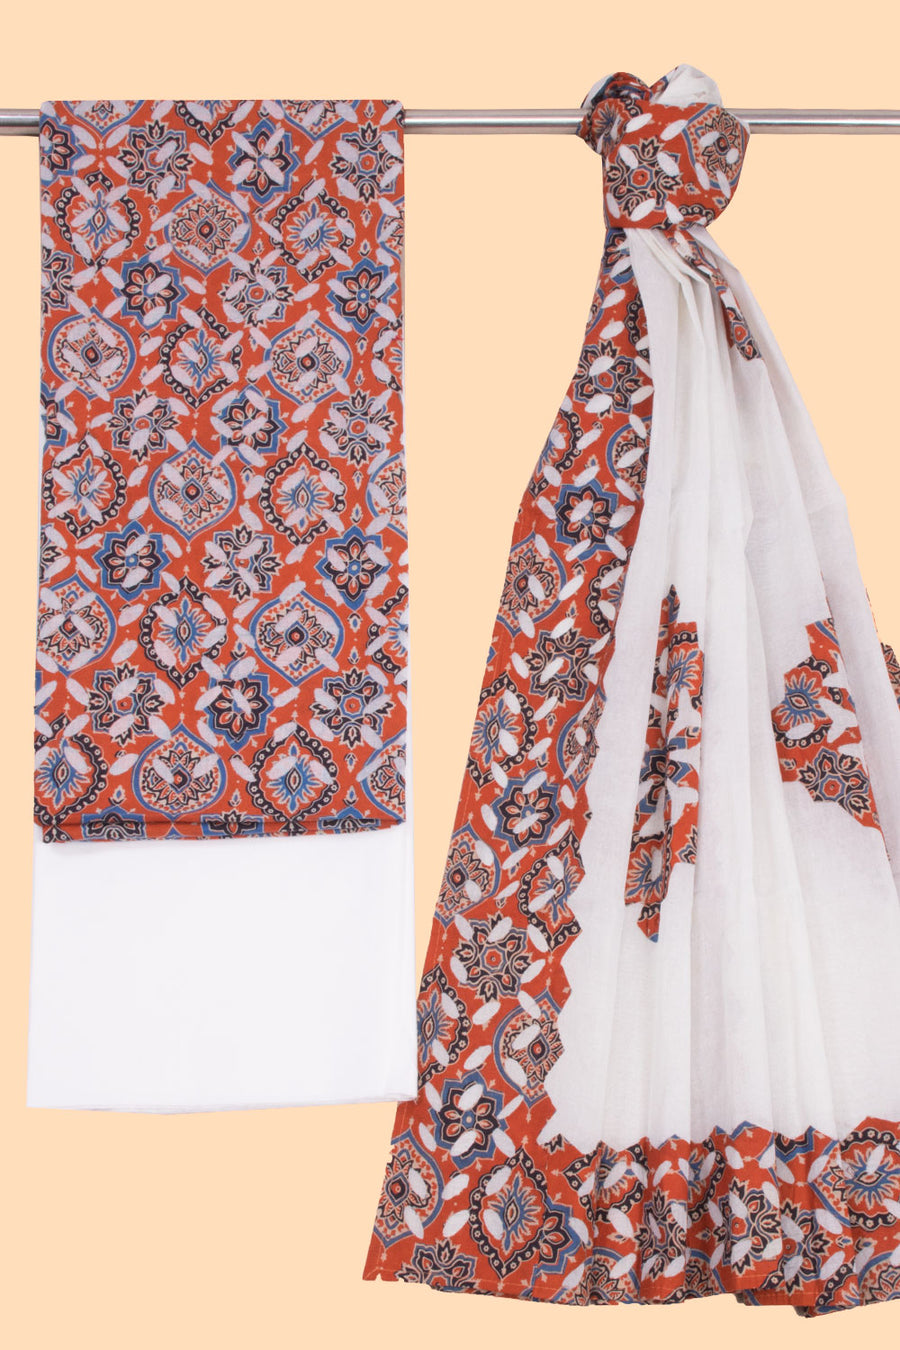 Tangerine Orange Barmer Applique Embroidered Cotton 3 Piece Salwar Suit Material 10070180